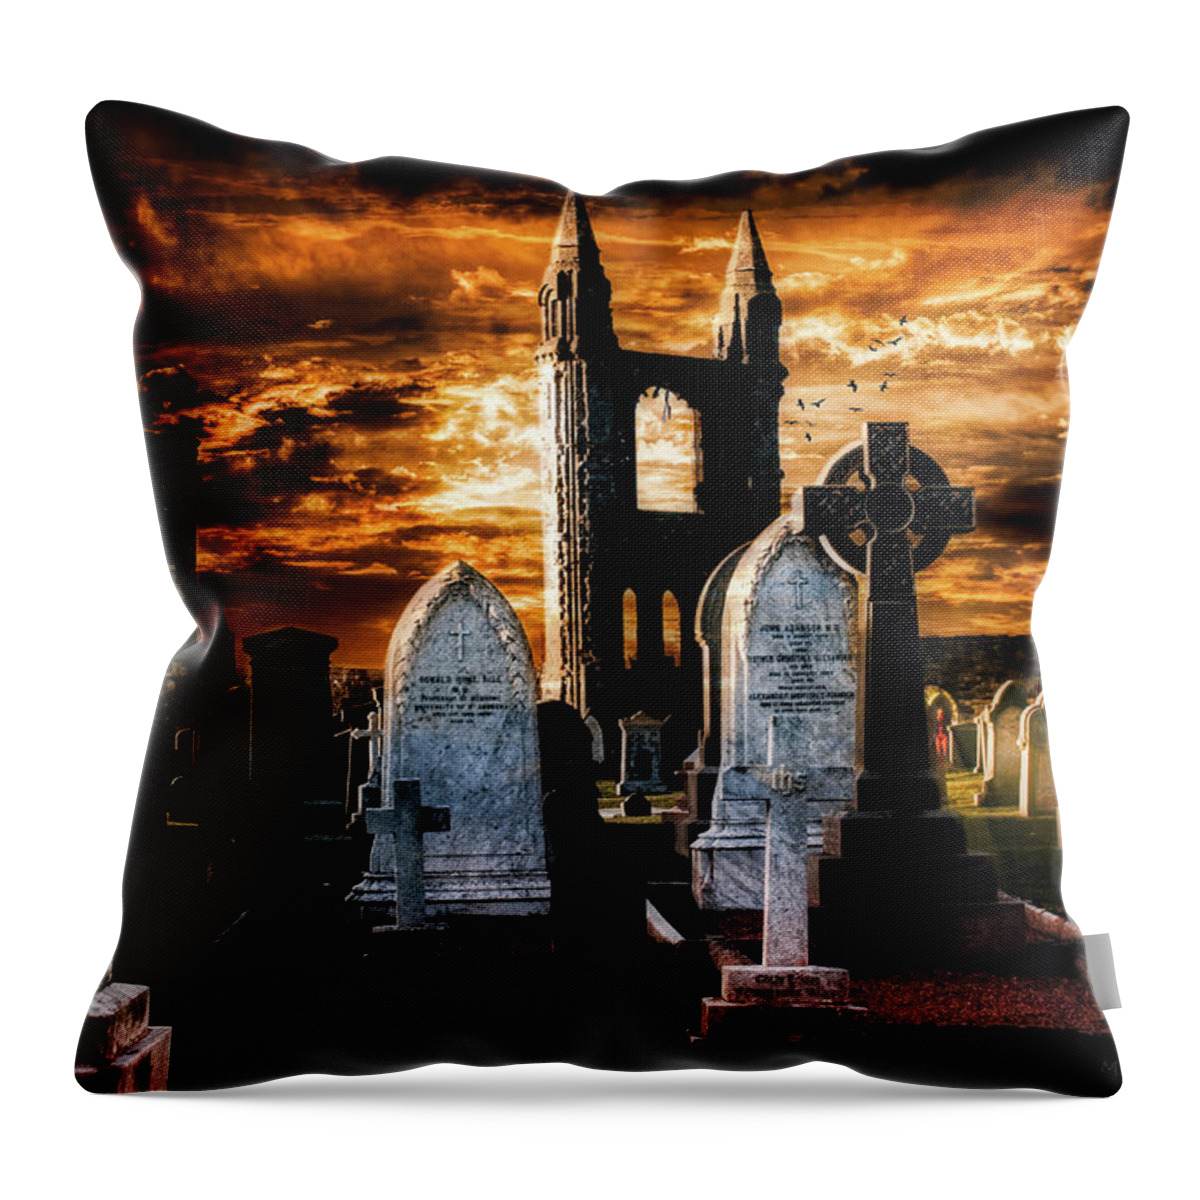 Graveyard Throw Pillow featuring the photograph St Andrews Graveyard by Micah Offman